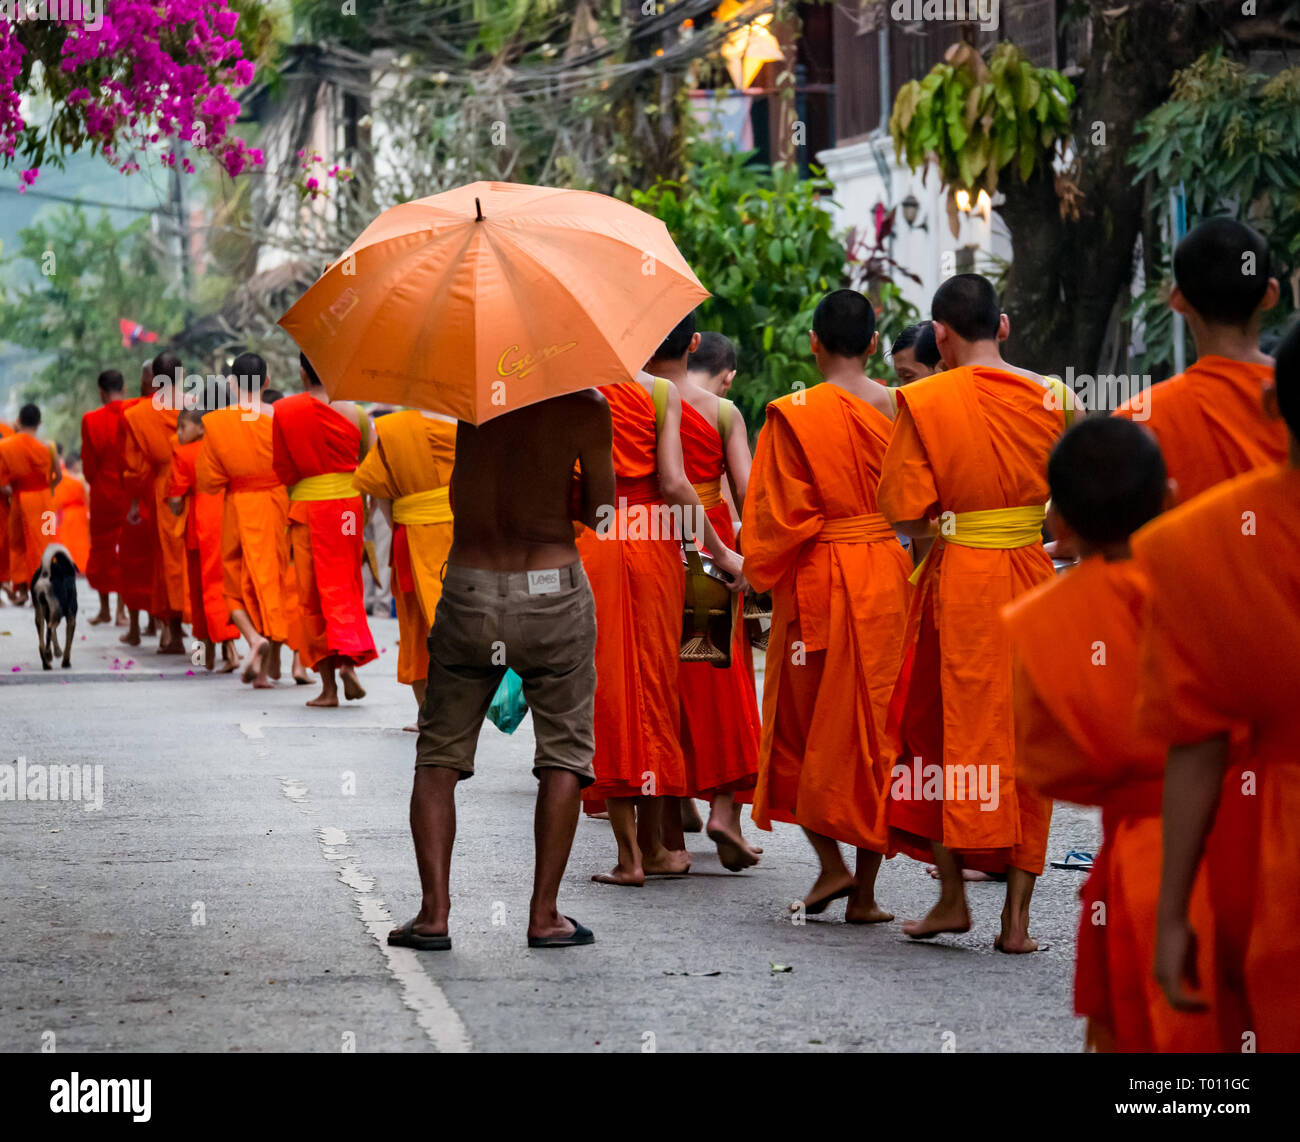 Hombre negro con paraguas naranja observa a los monjes budistas en la cola de batas naranjas para la ceremonia de entrega de limosnas de la mañana, Luang Prabang, Laos Foto de stock